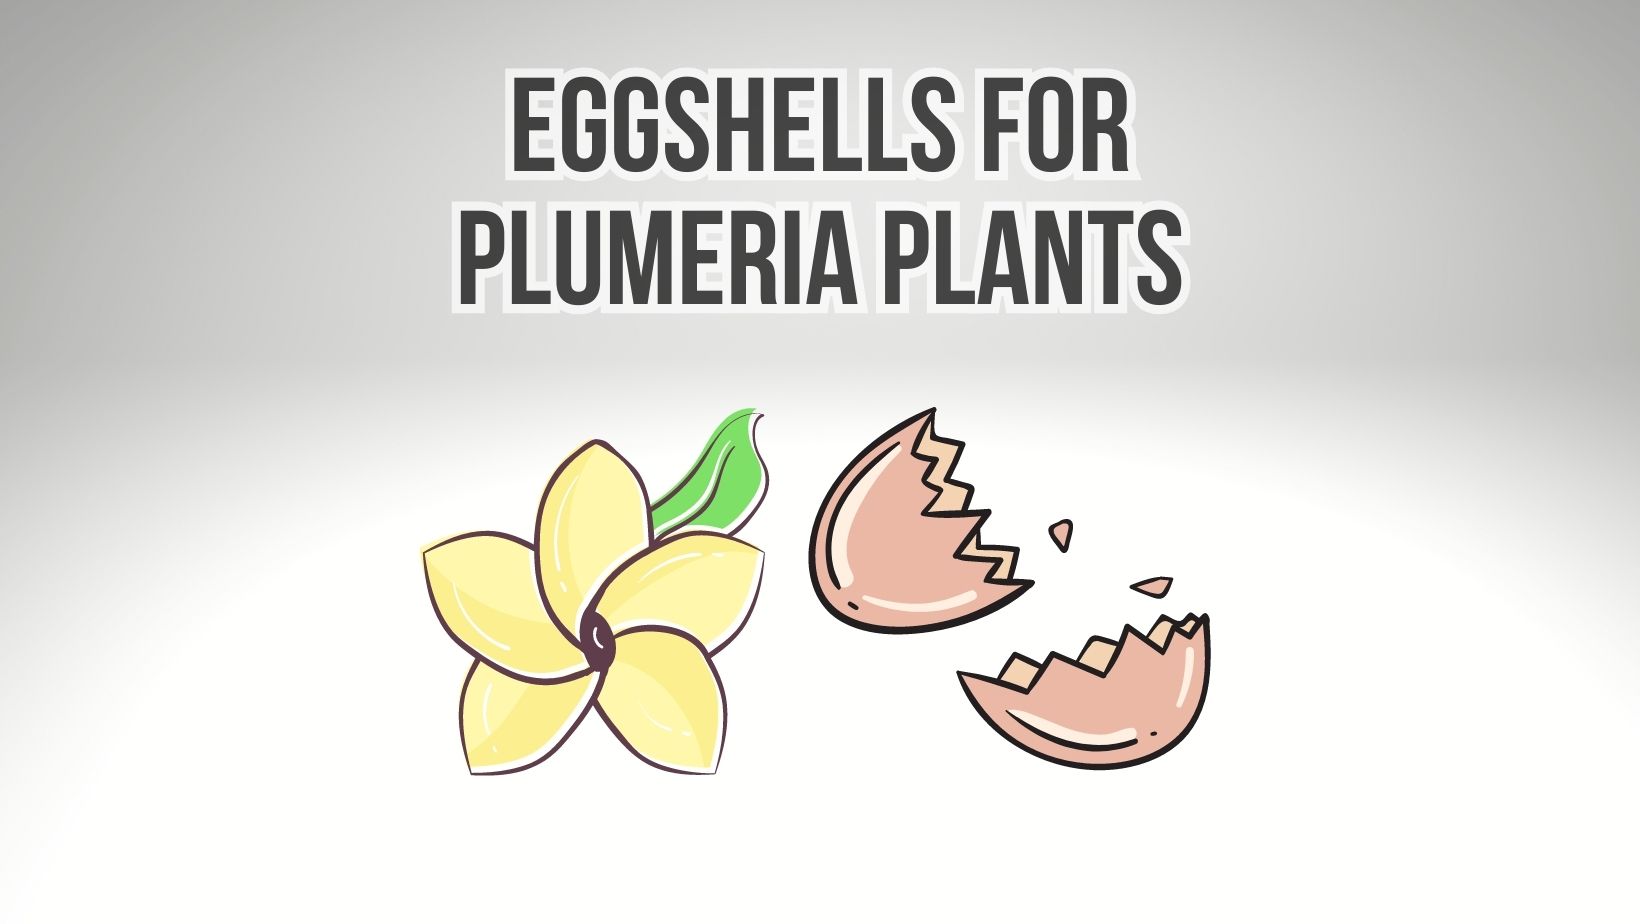 Are Eggshells Good For Plumeria Plants